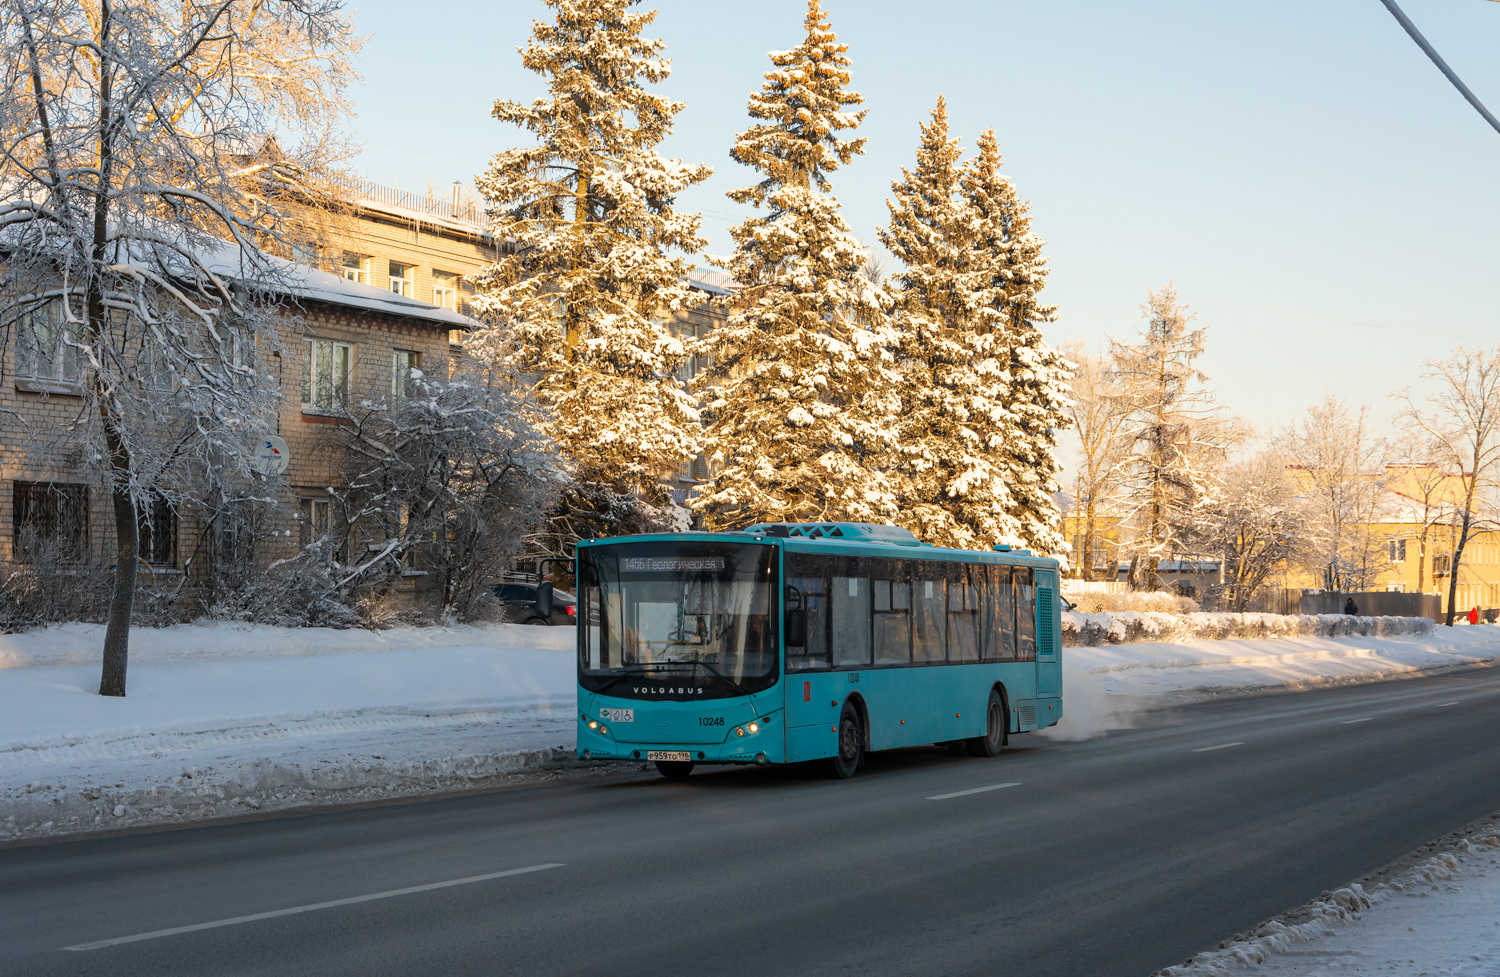 Saint Petersburg, Volgabus-5270.G4 (LNG) # 10248